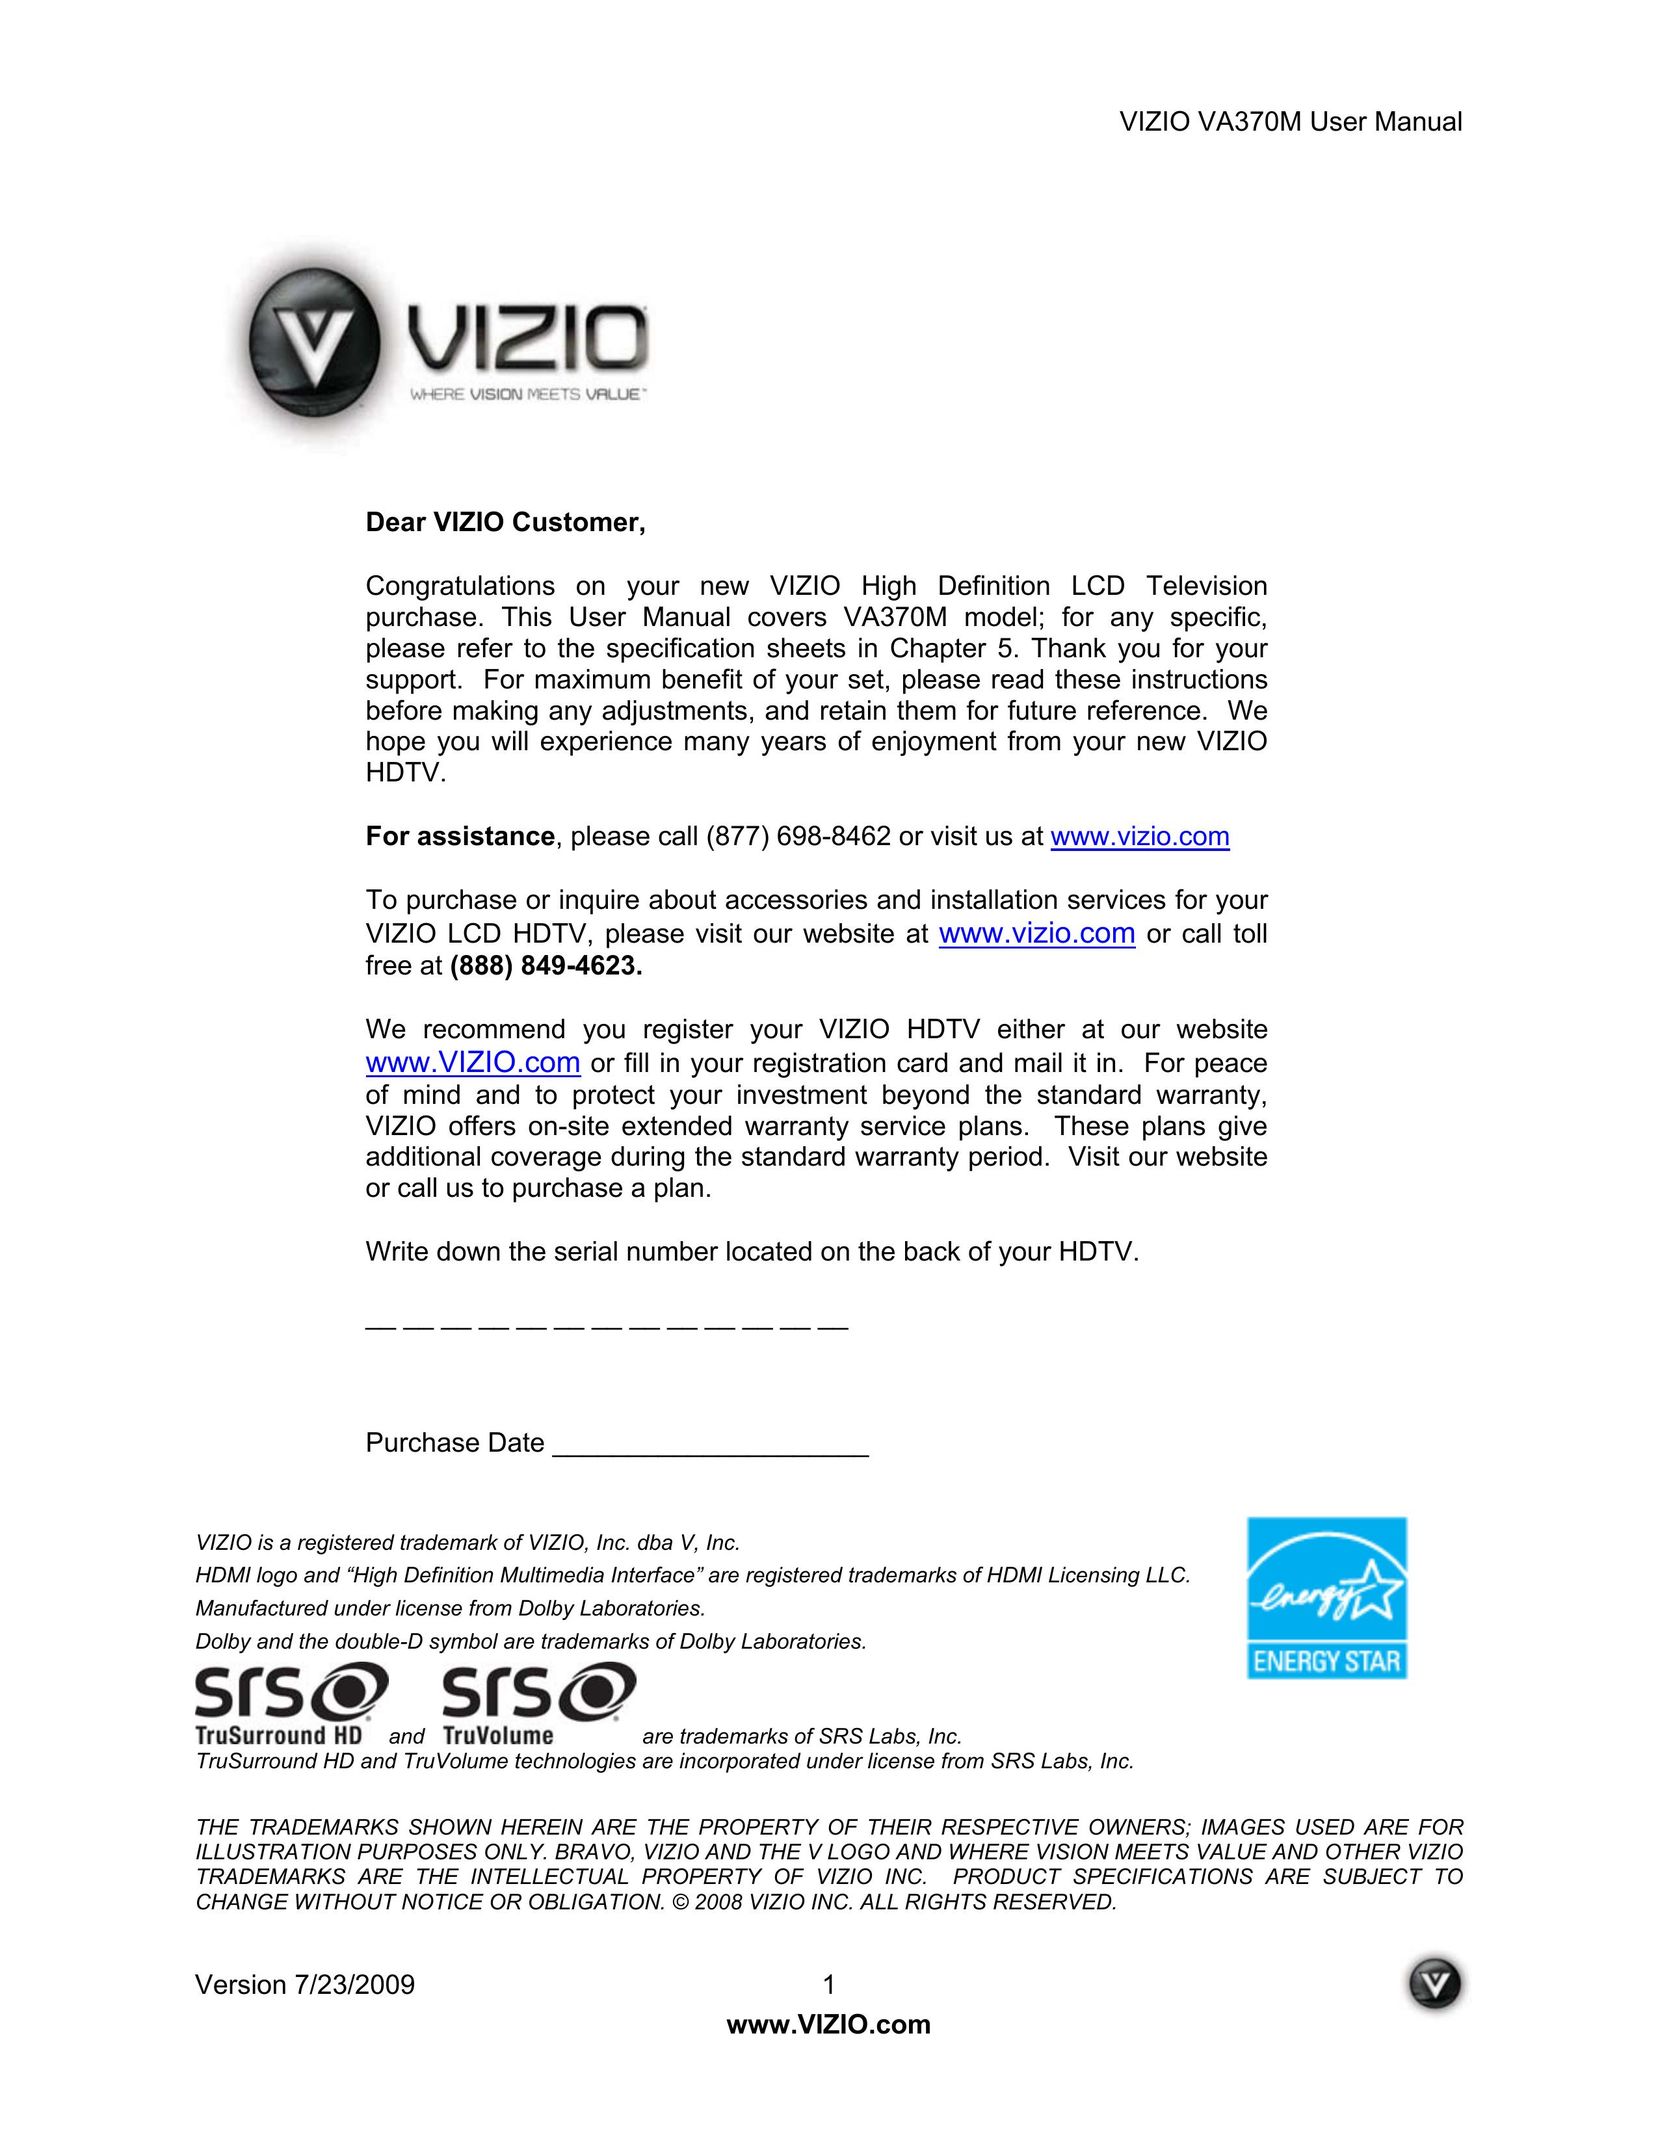 Vuzix VA370M Flat Panel Television User Manual